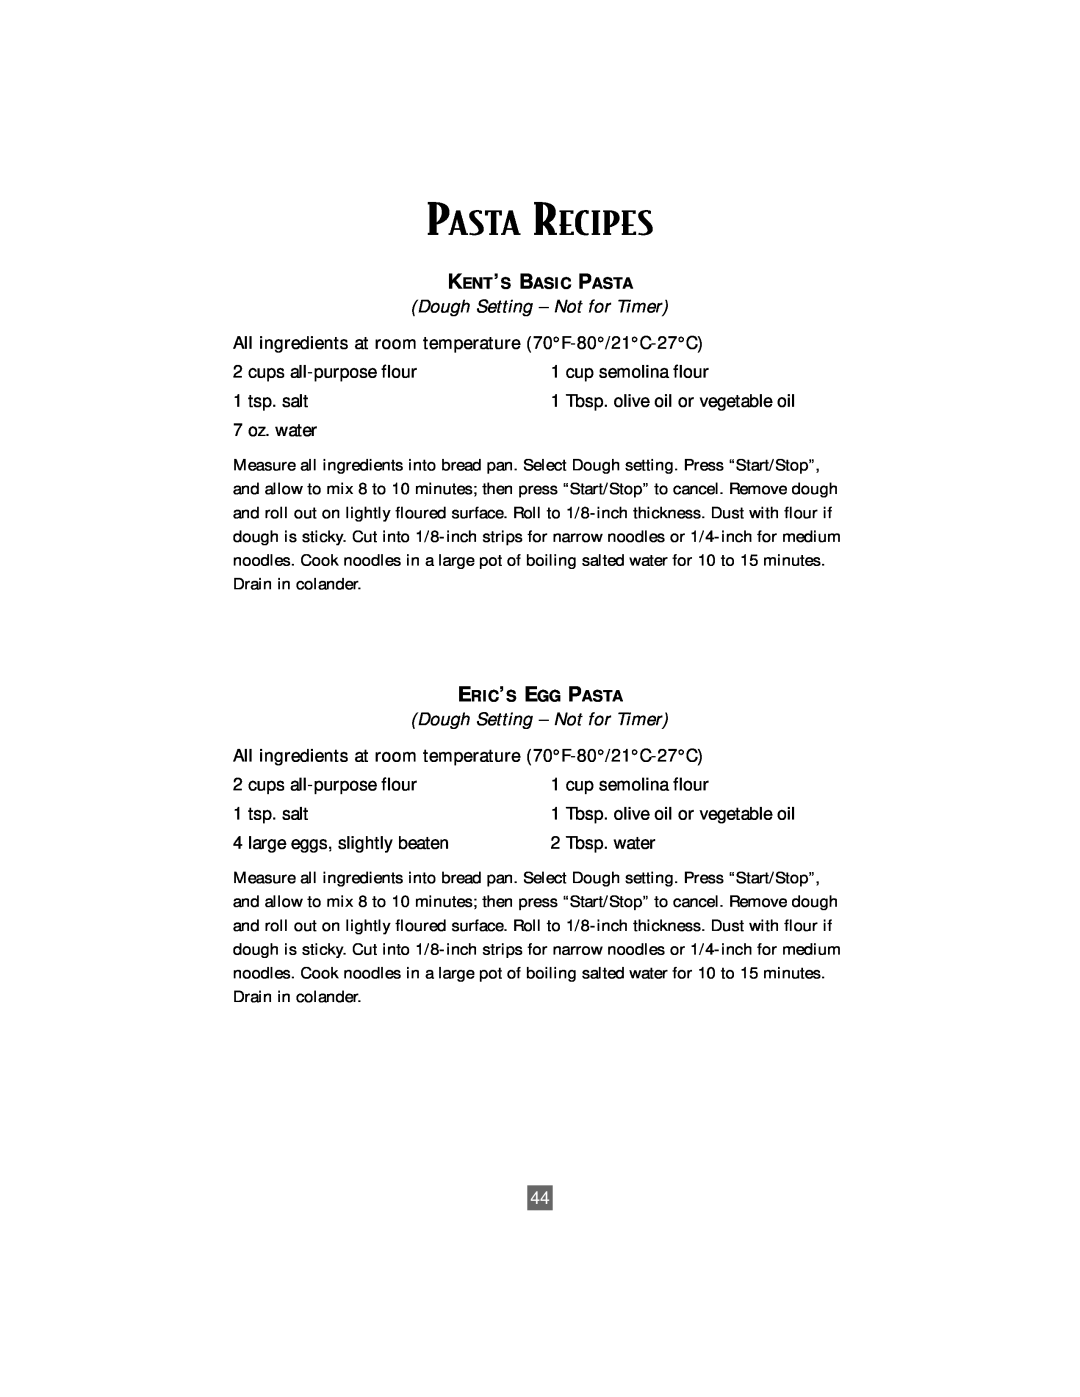 Sunbeam Bread/Dough Maker manual Pasta Recipes, Dough Setting - Not for Timer, Kent’S Basic Pasta, Eric’S Egg Pasta 